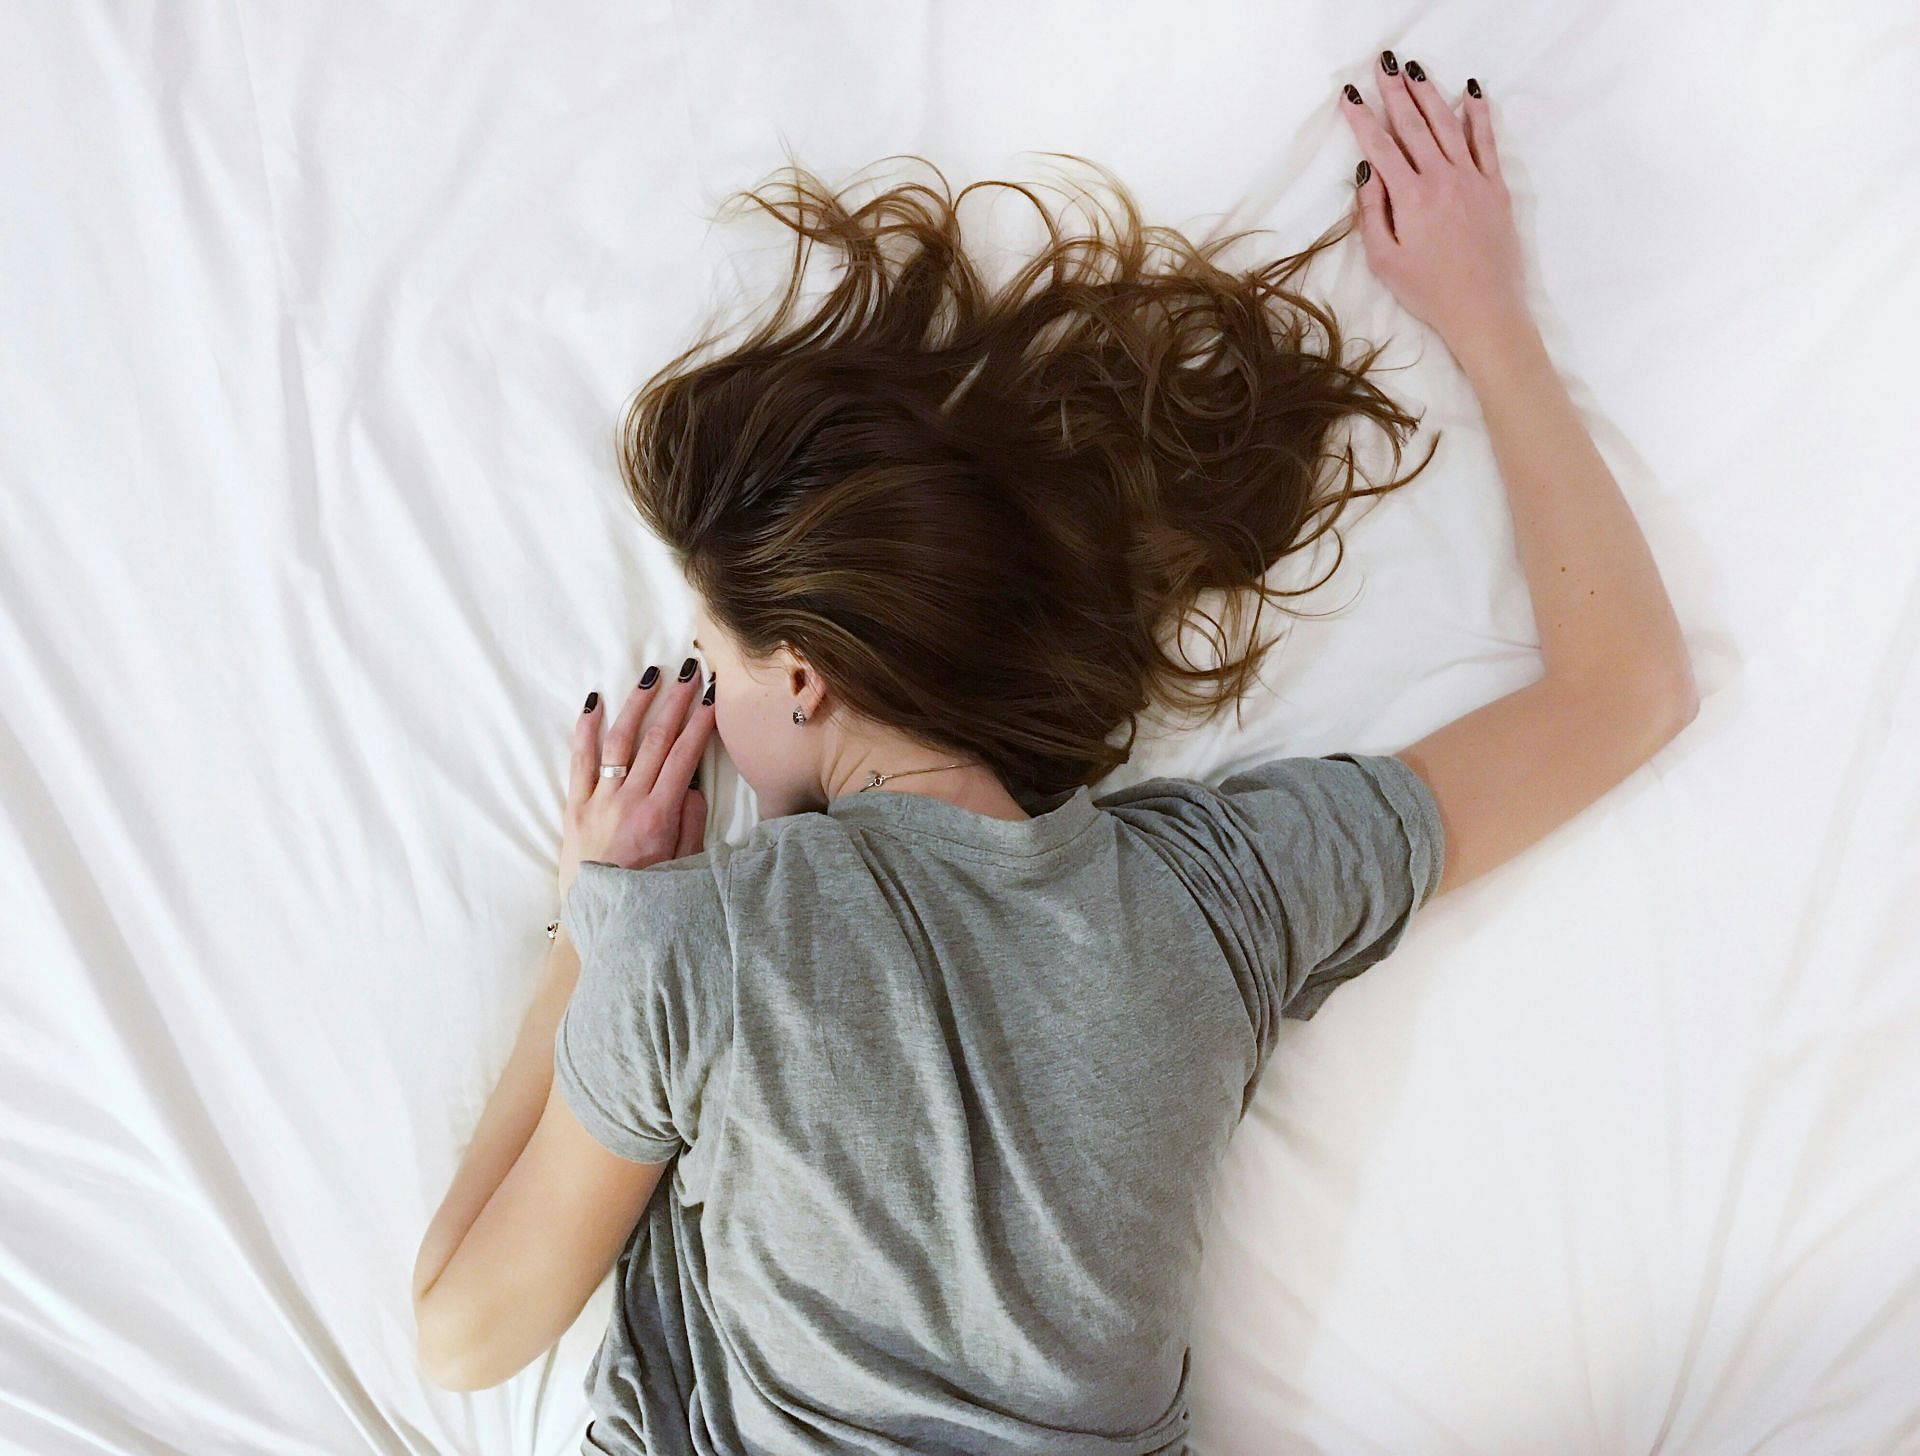 Getting proper sleep can avoid triggering headaches(Image by Vladislav Muslakov/Unsplash)